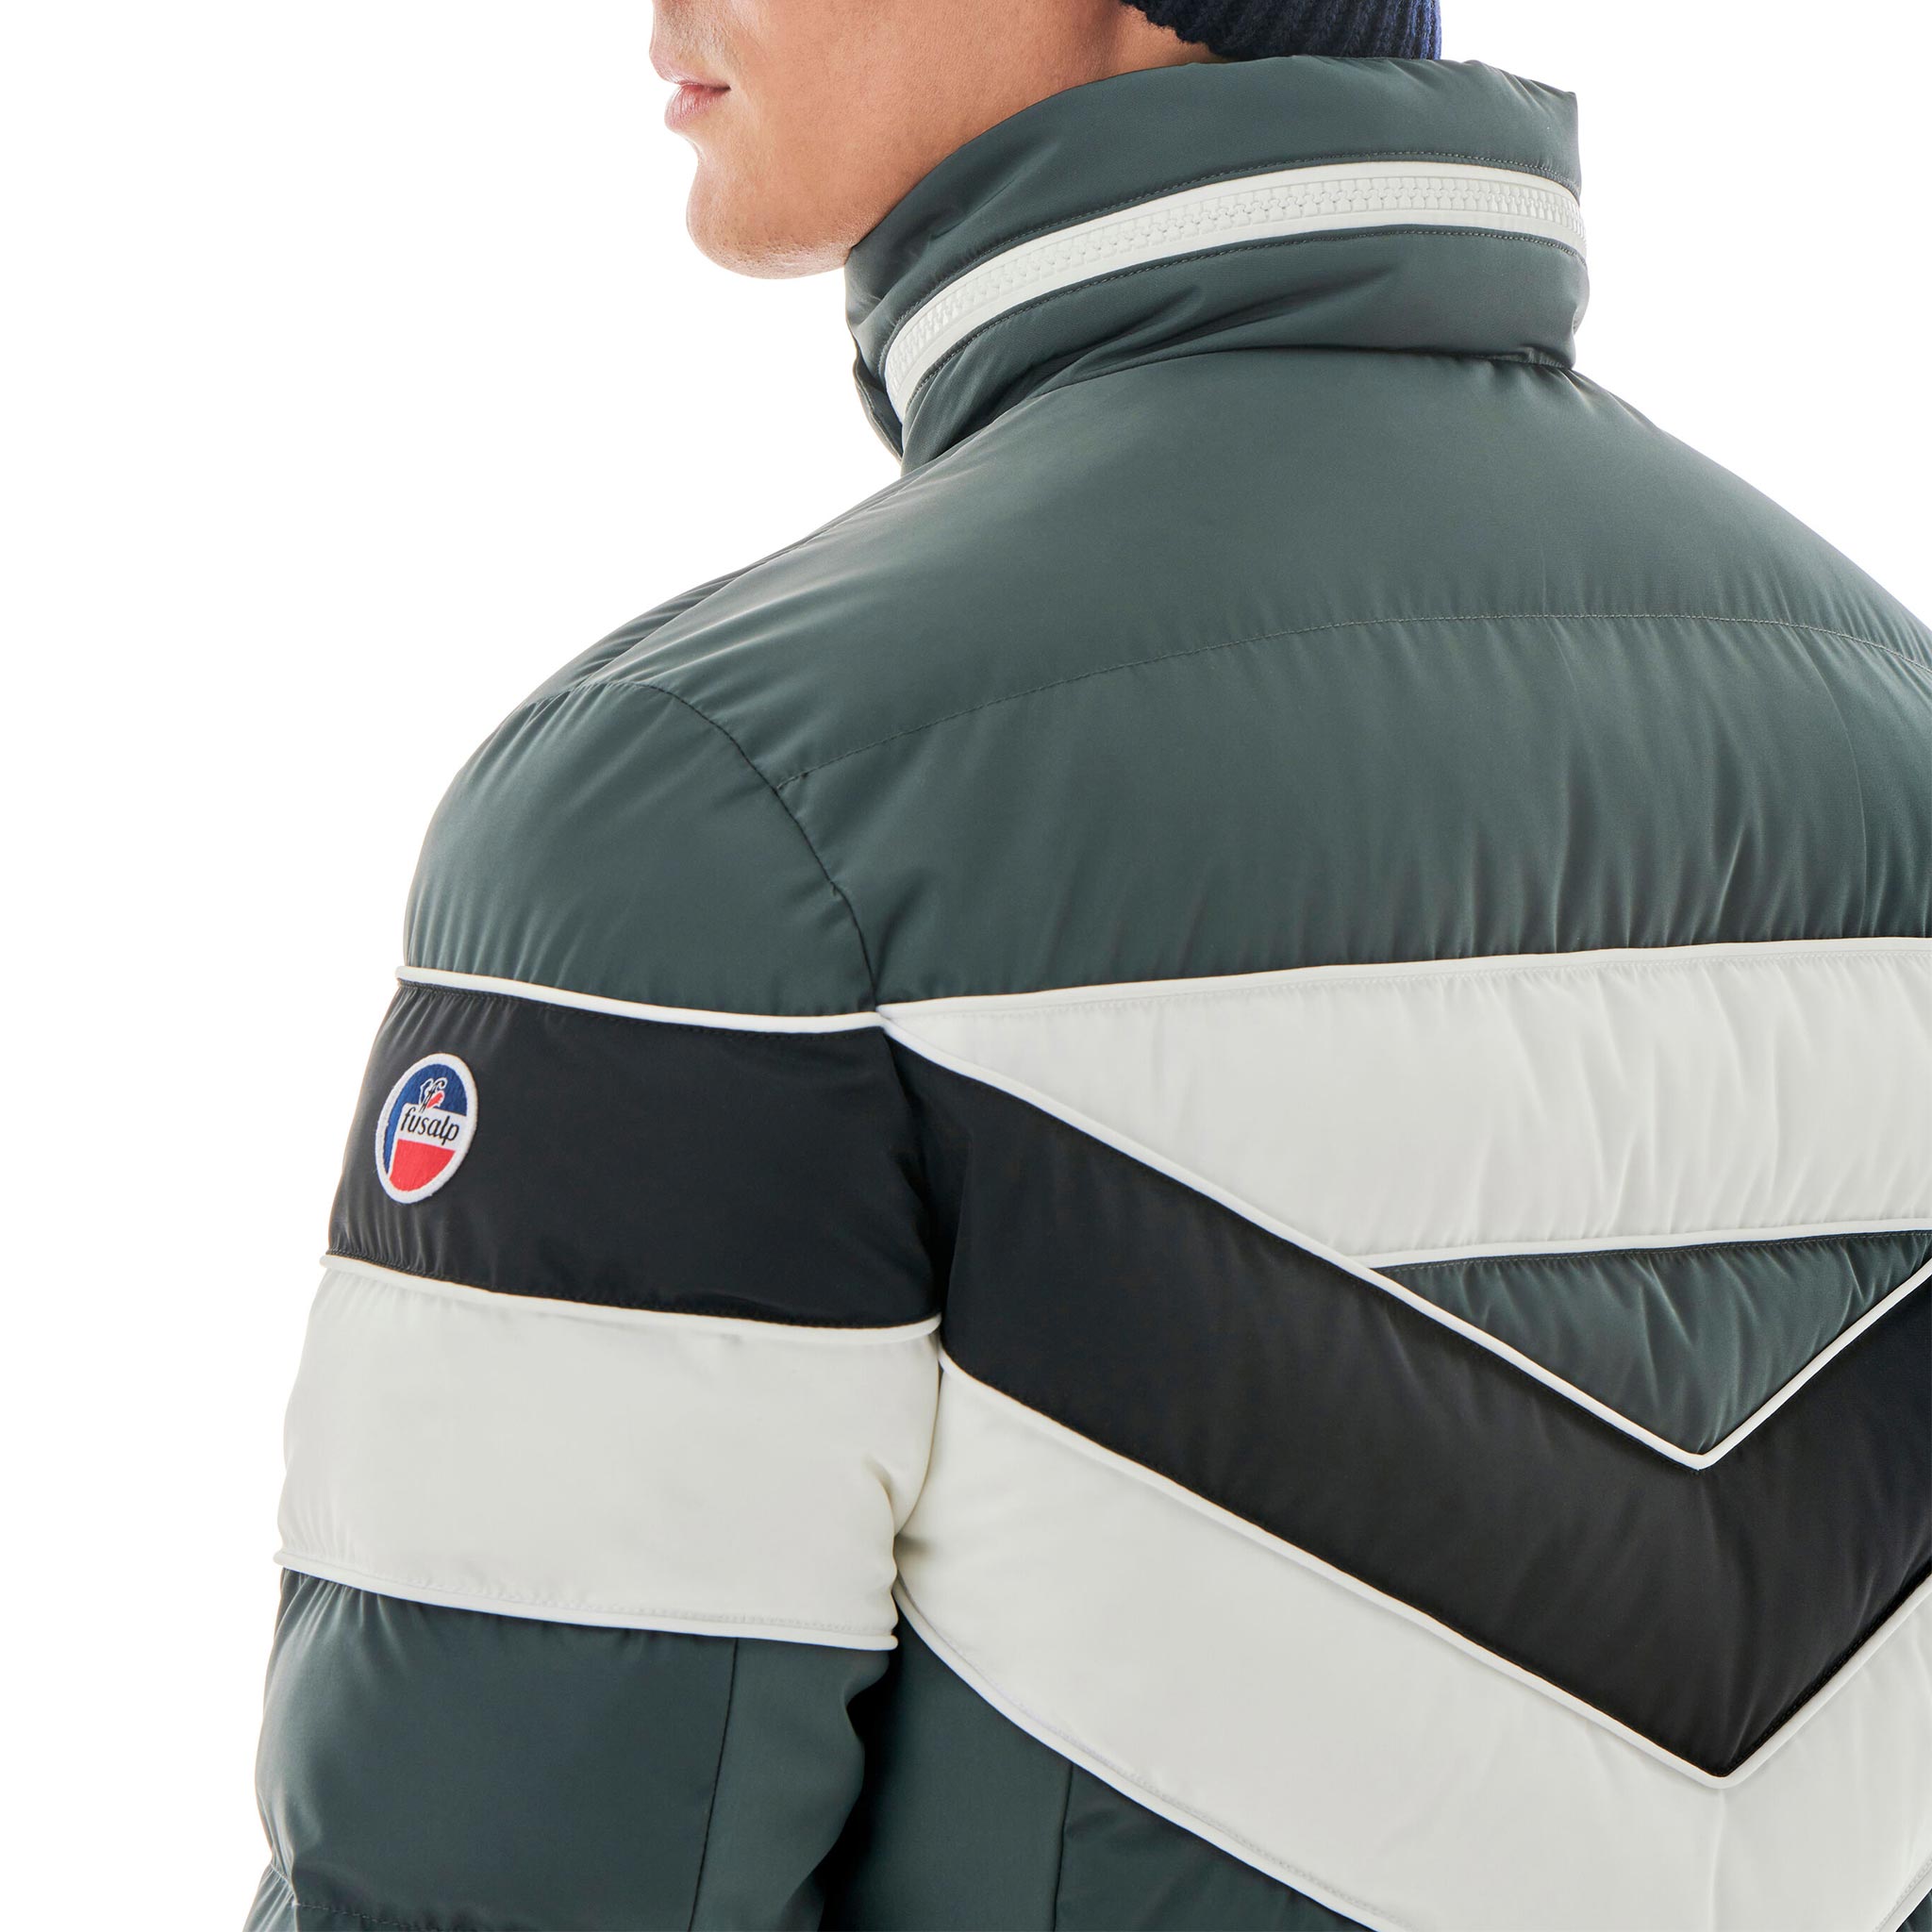 Fernand Ski Jacket in Siebre